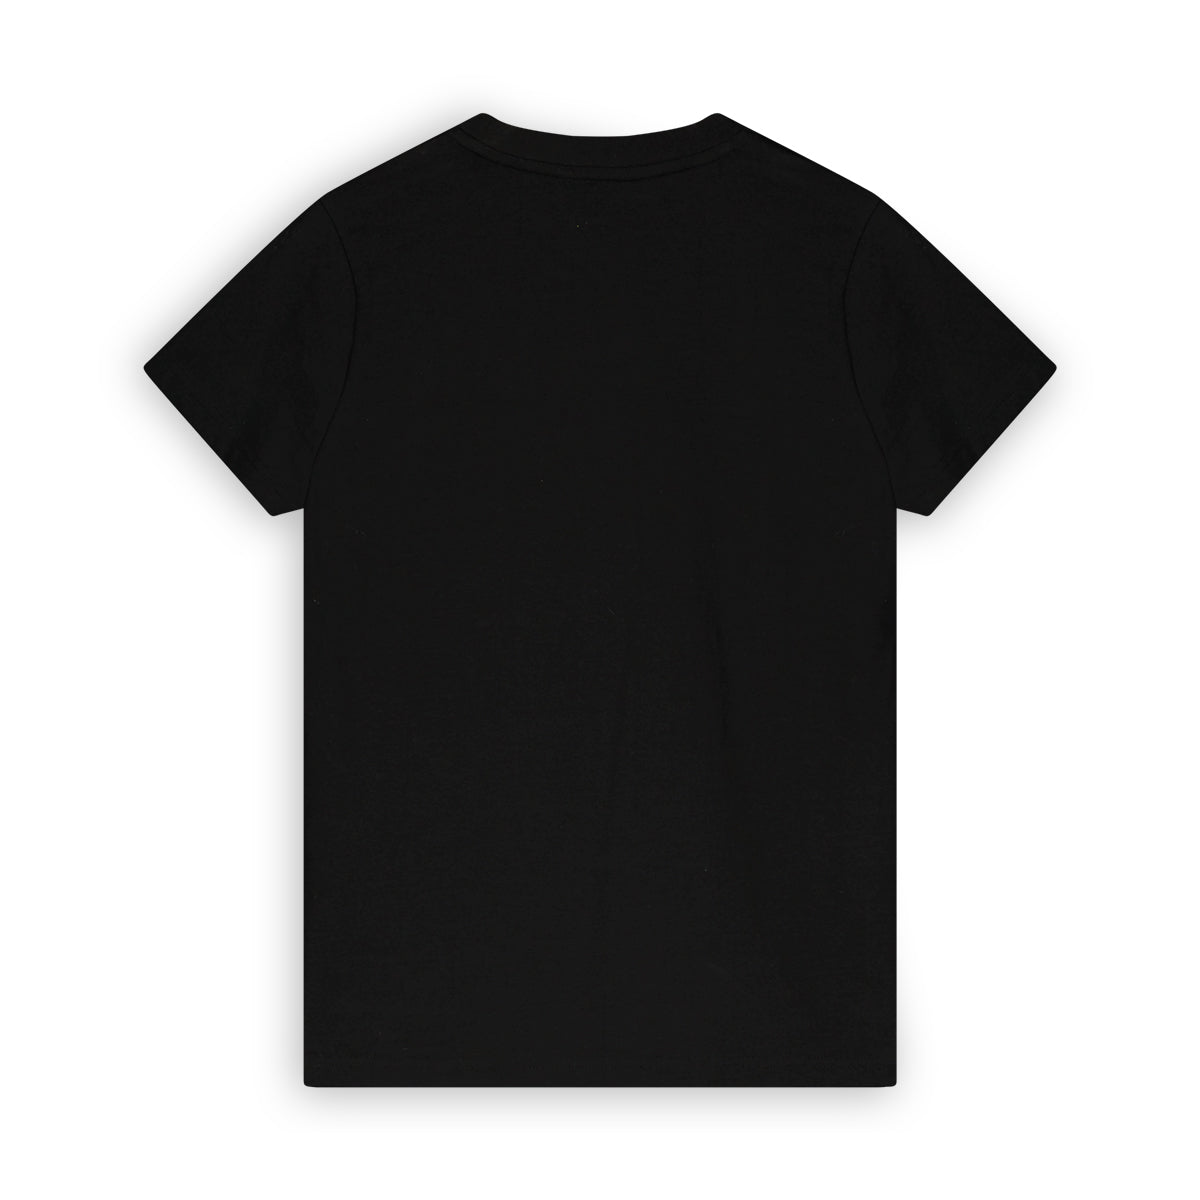 Selim T-shirt Black2